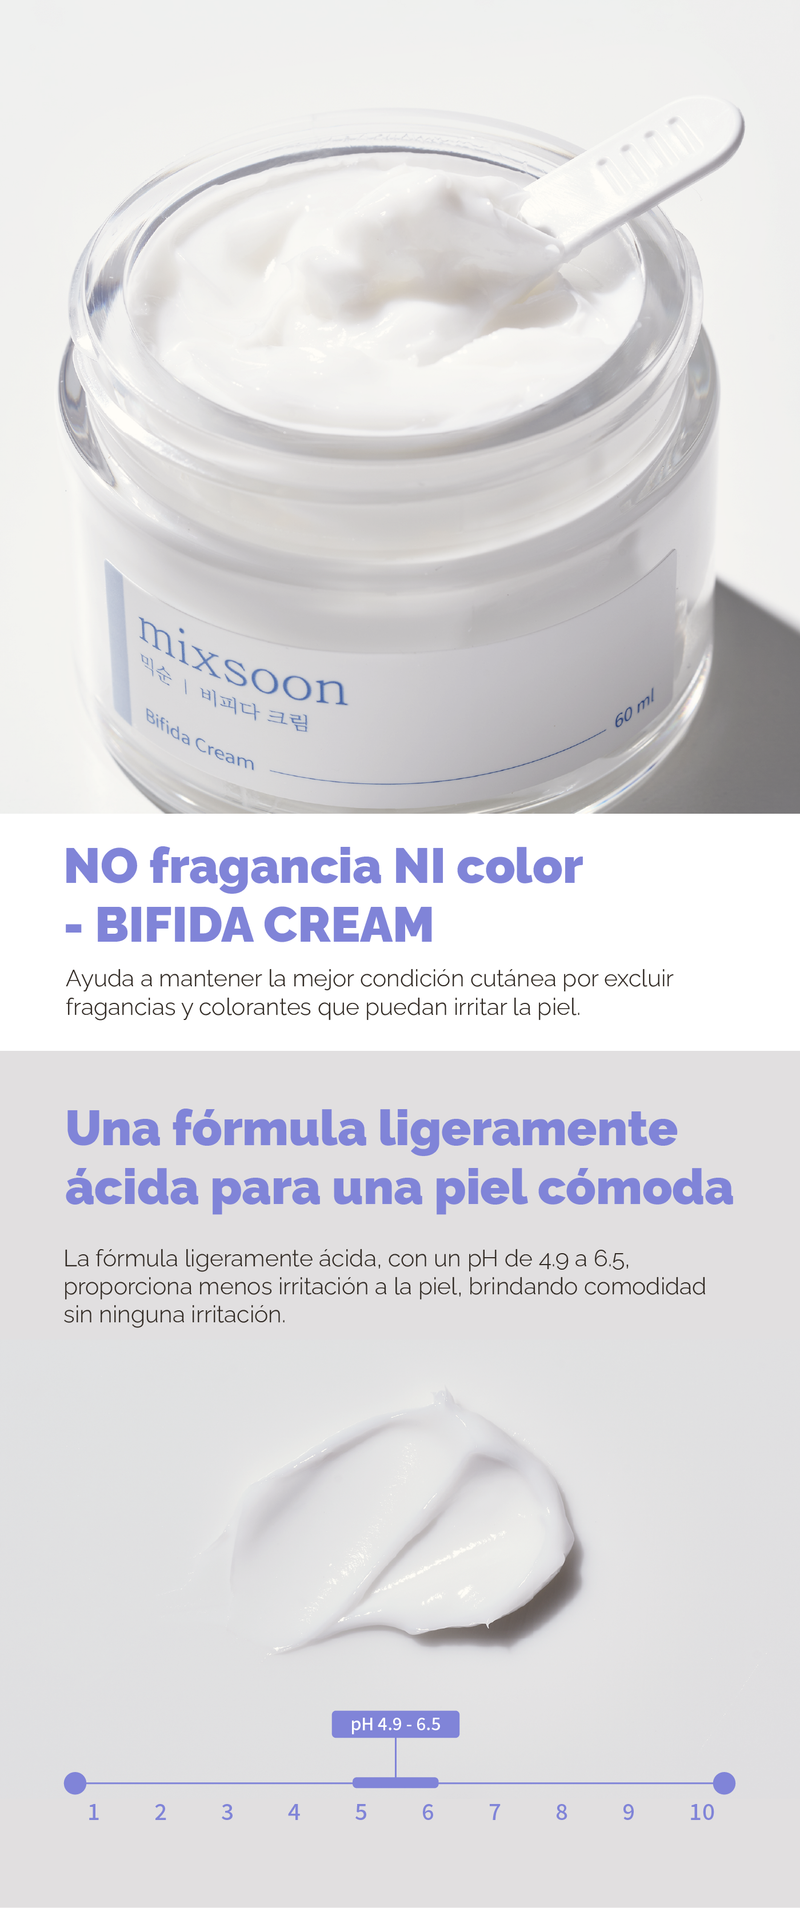 MIXSOON Bifida cream